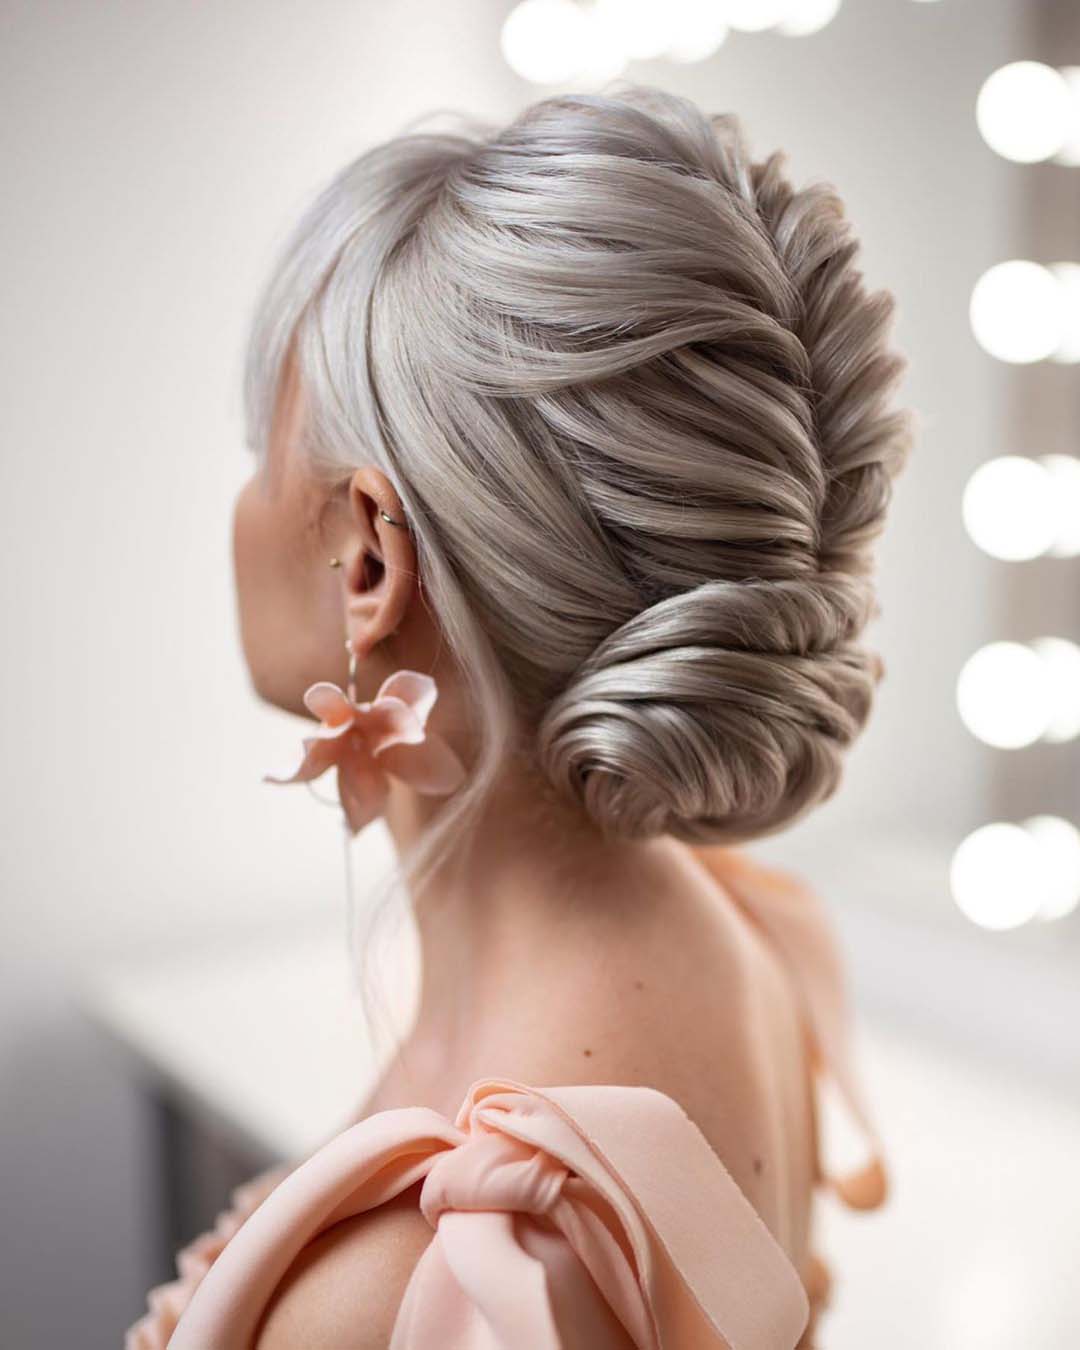 bridesmaid hairstyles textured braided low bun beautybyrockagirl